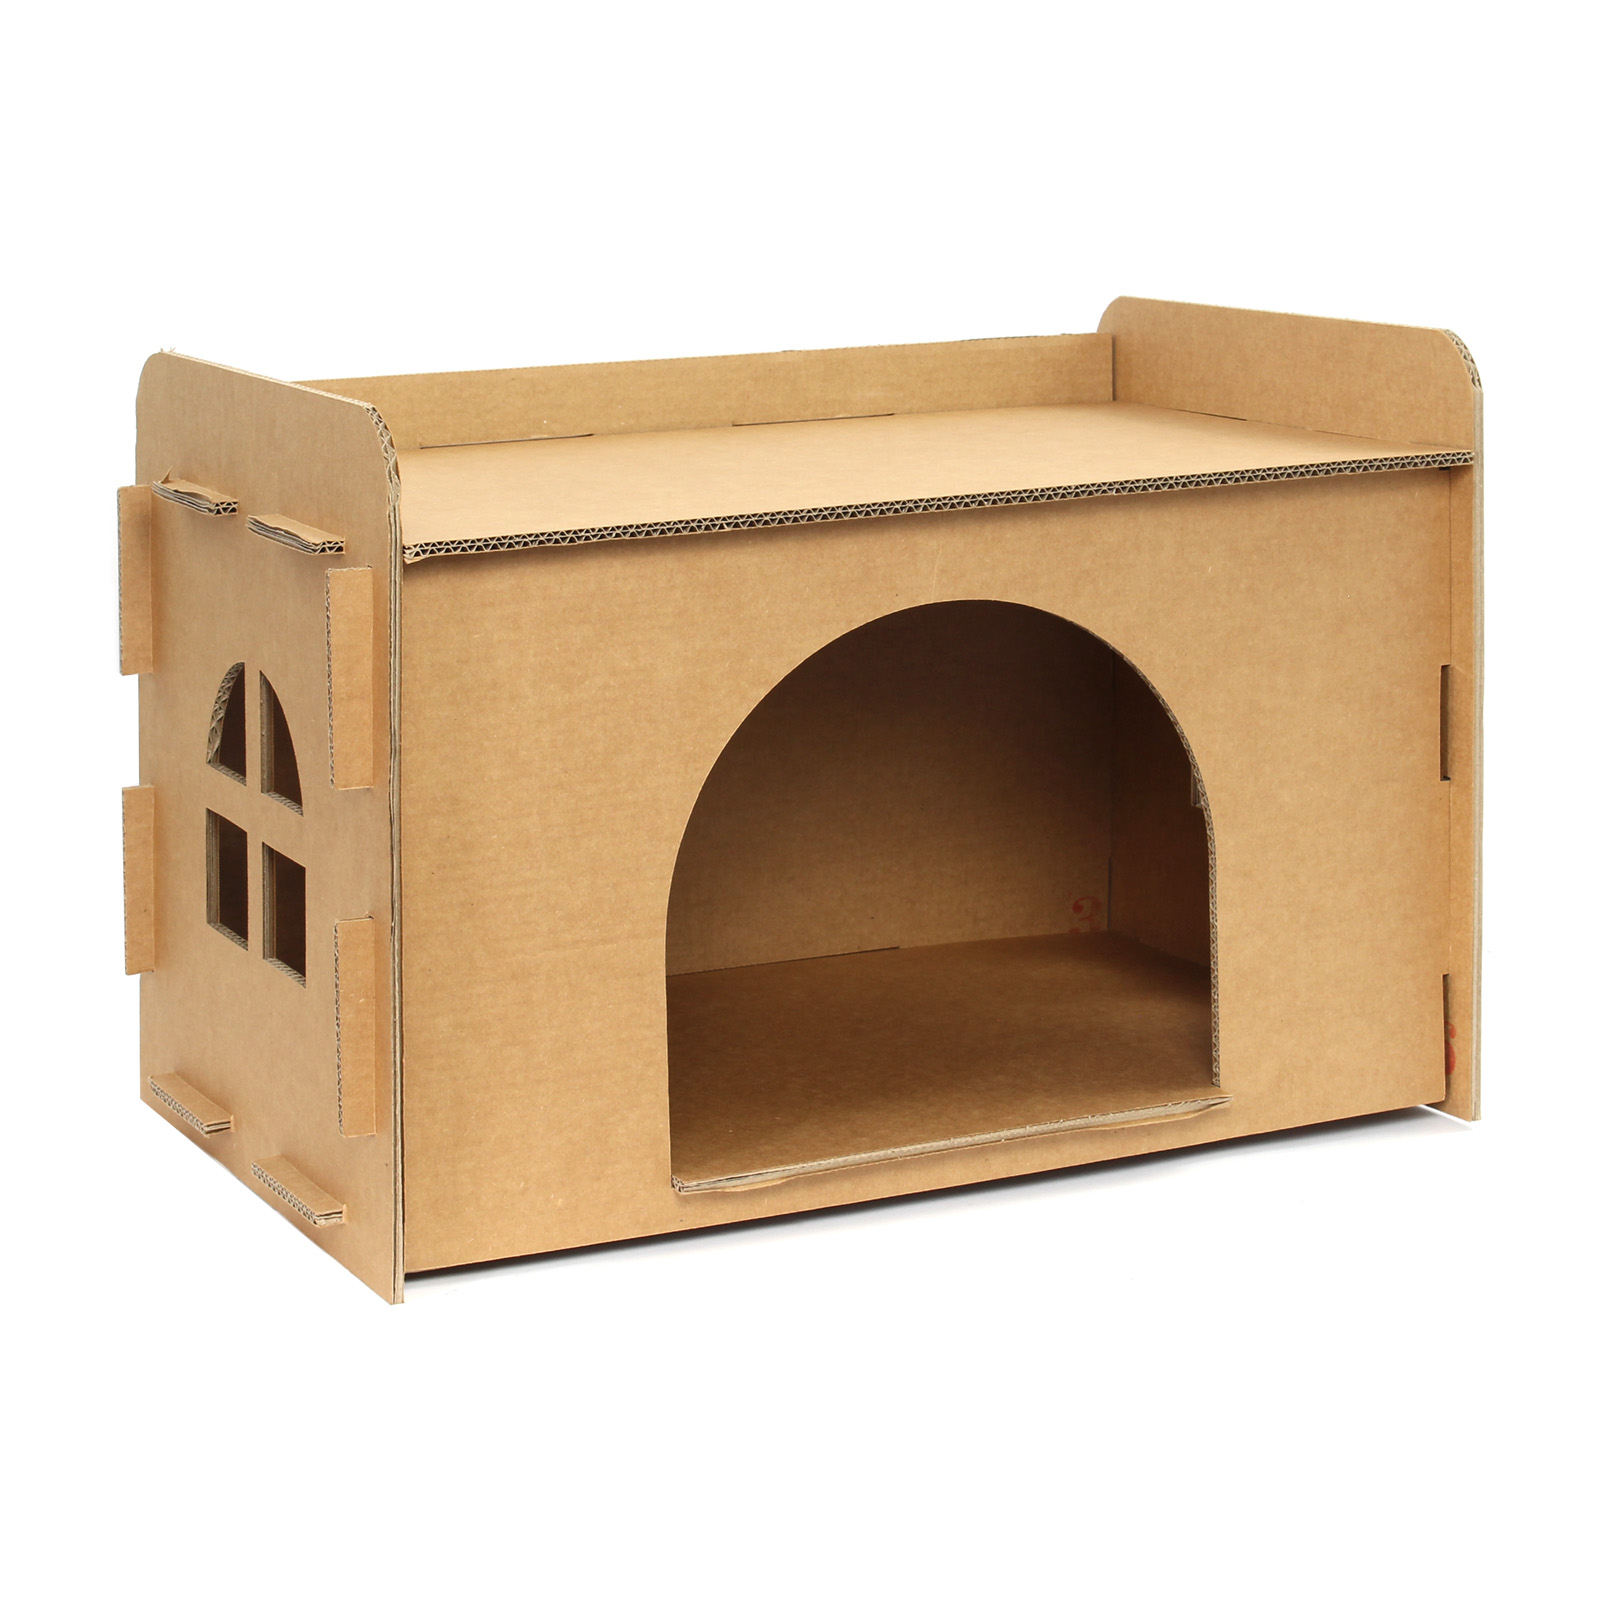 Katzenhütte klein aus Pappe Katzenhaus Karton Katzenhöhle Stecksystem